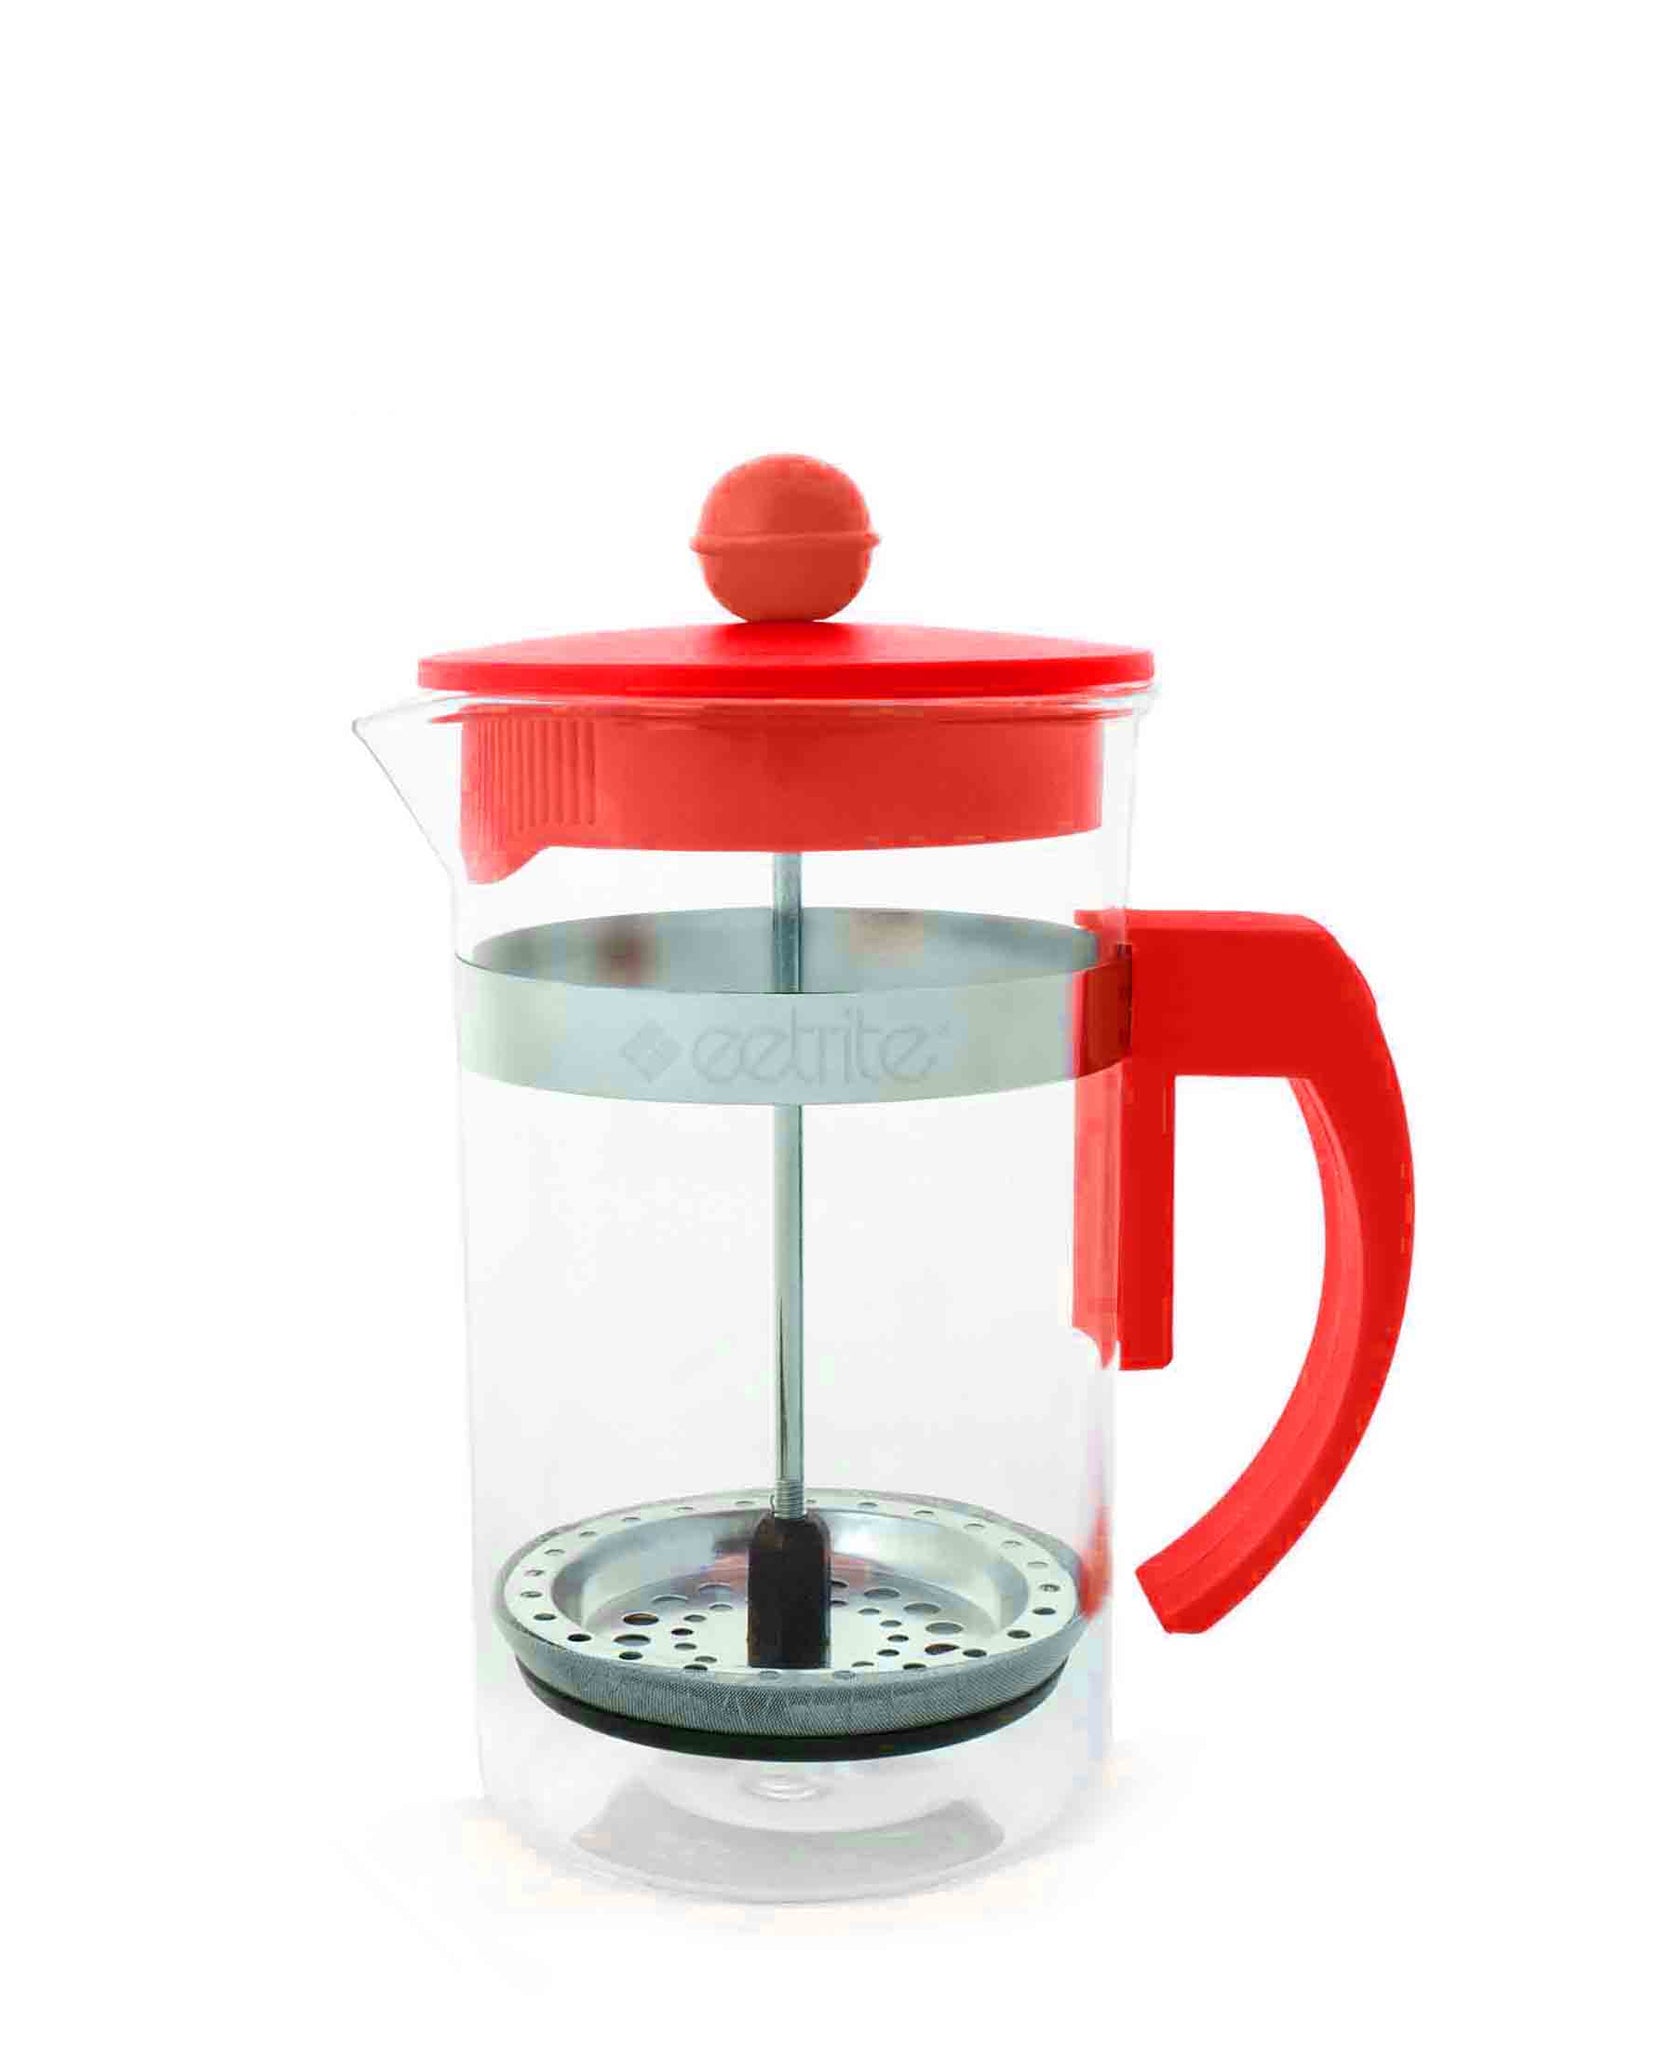 Eetrite Coffee Plunger 600ML - Red